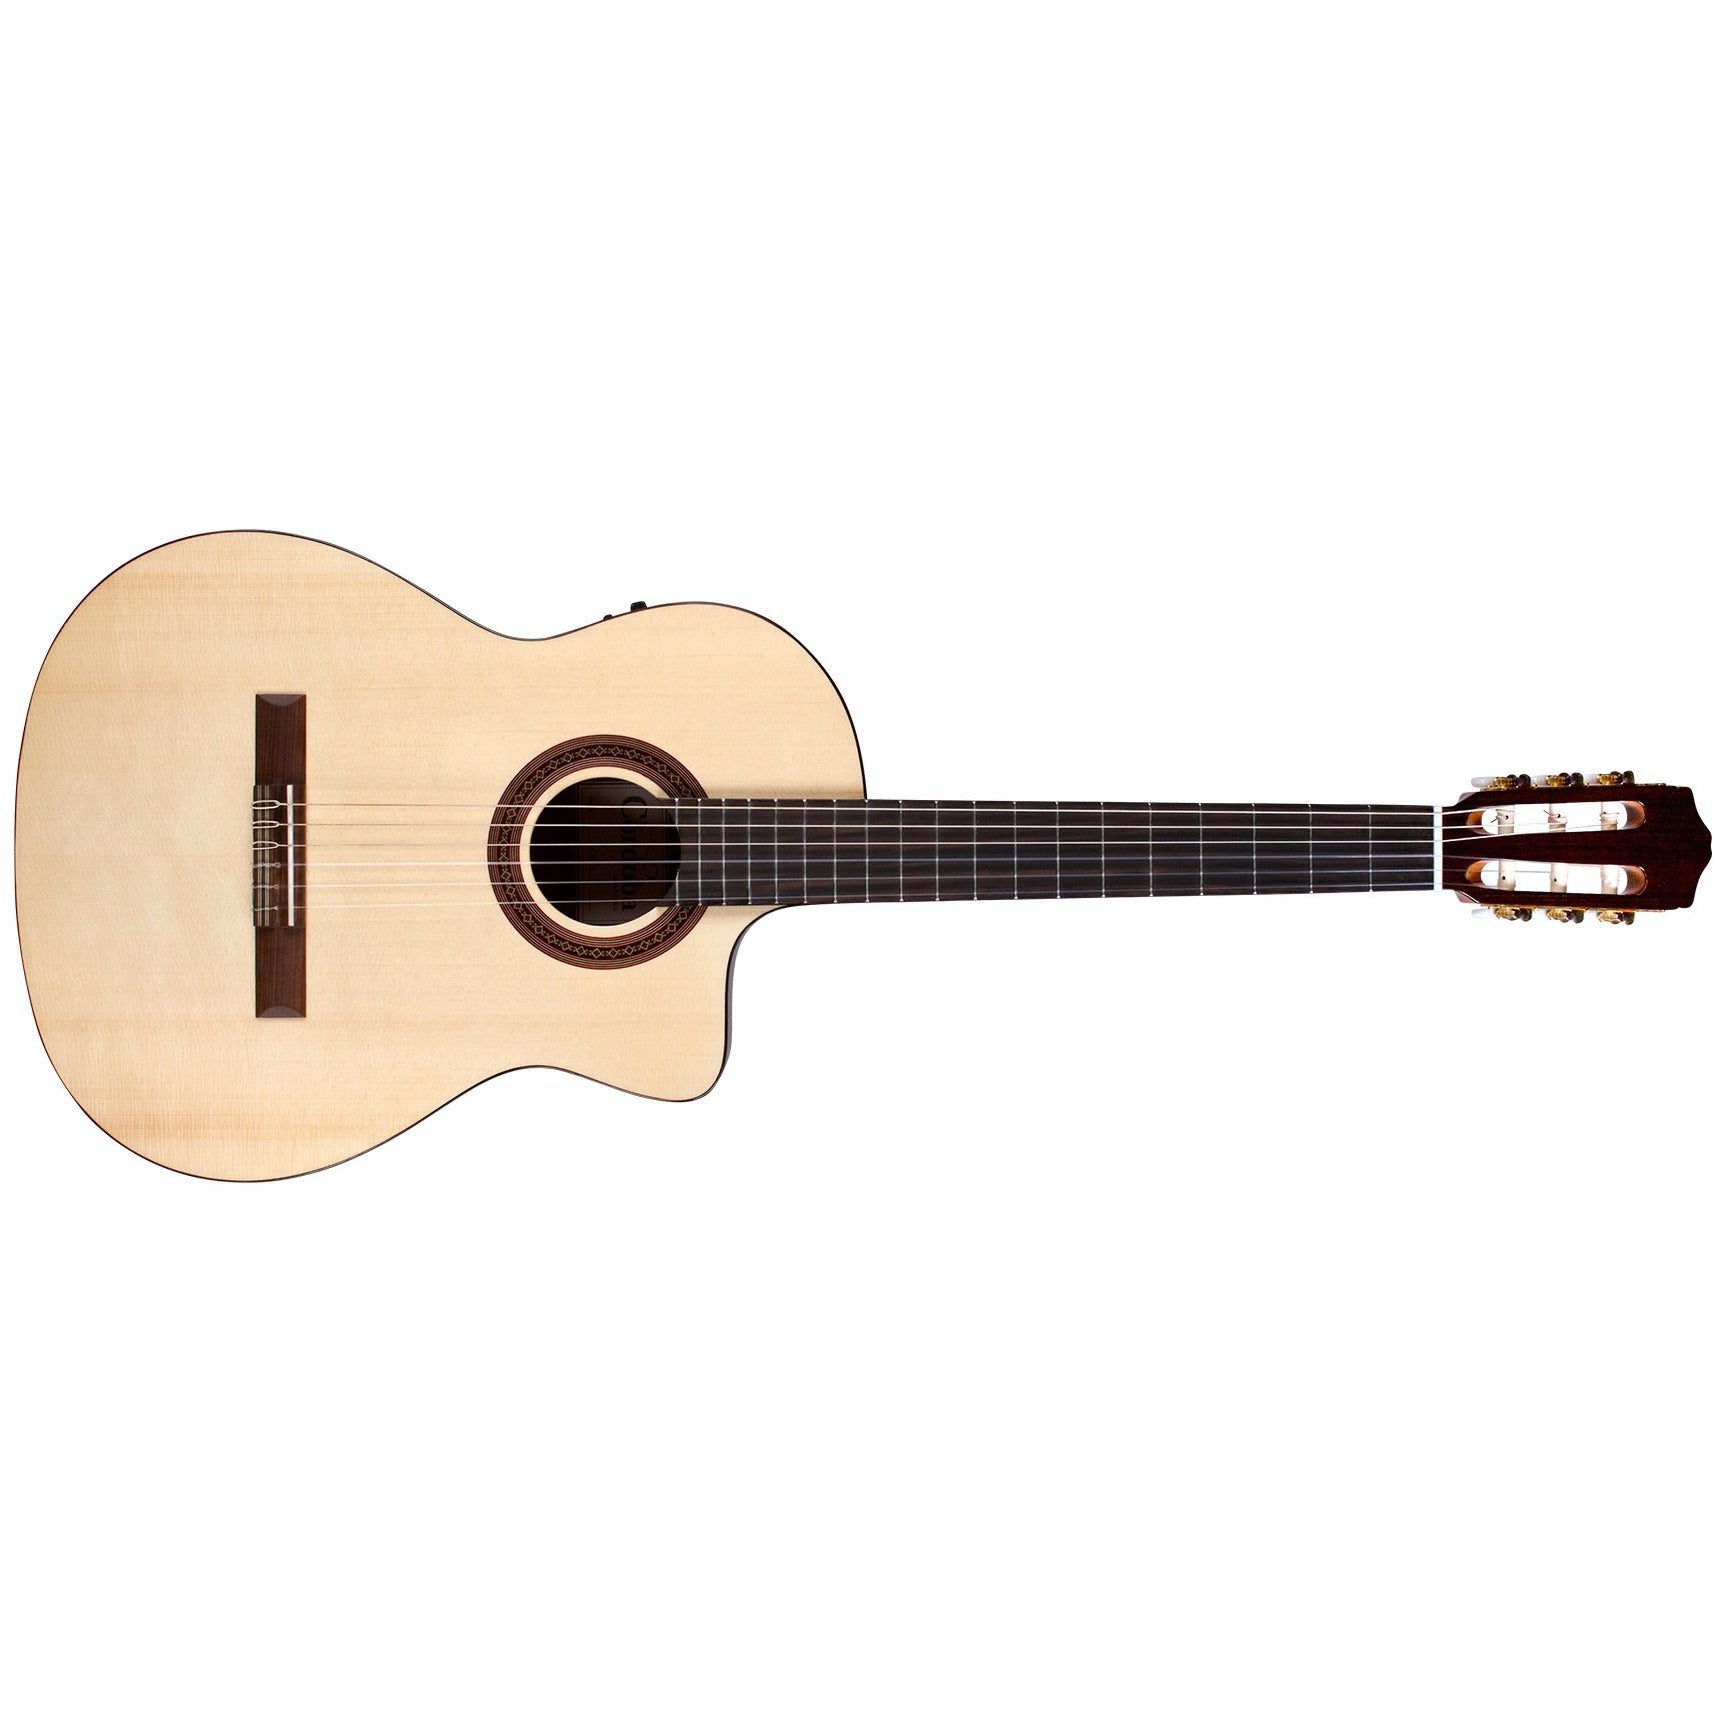 Image 2 of Cordoba C5-CE Spruce Top Classical Guitar - SKU# CORC5CESP : Product Type Classical & Flamenco Guitars : Elderly Instruments